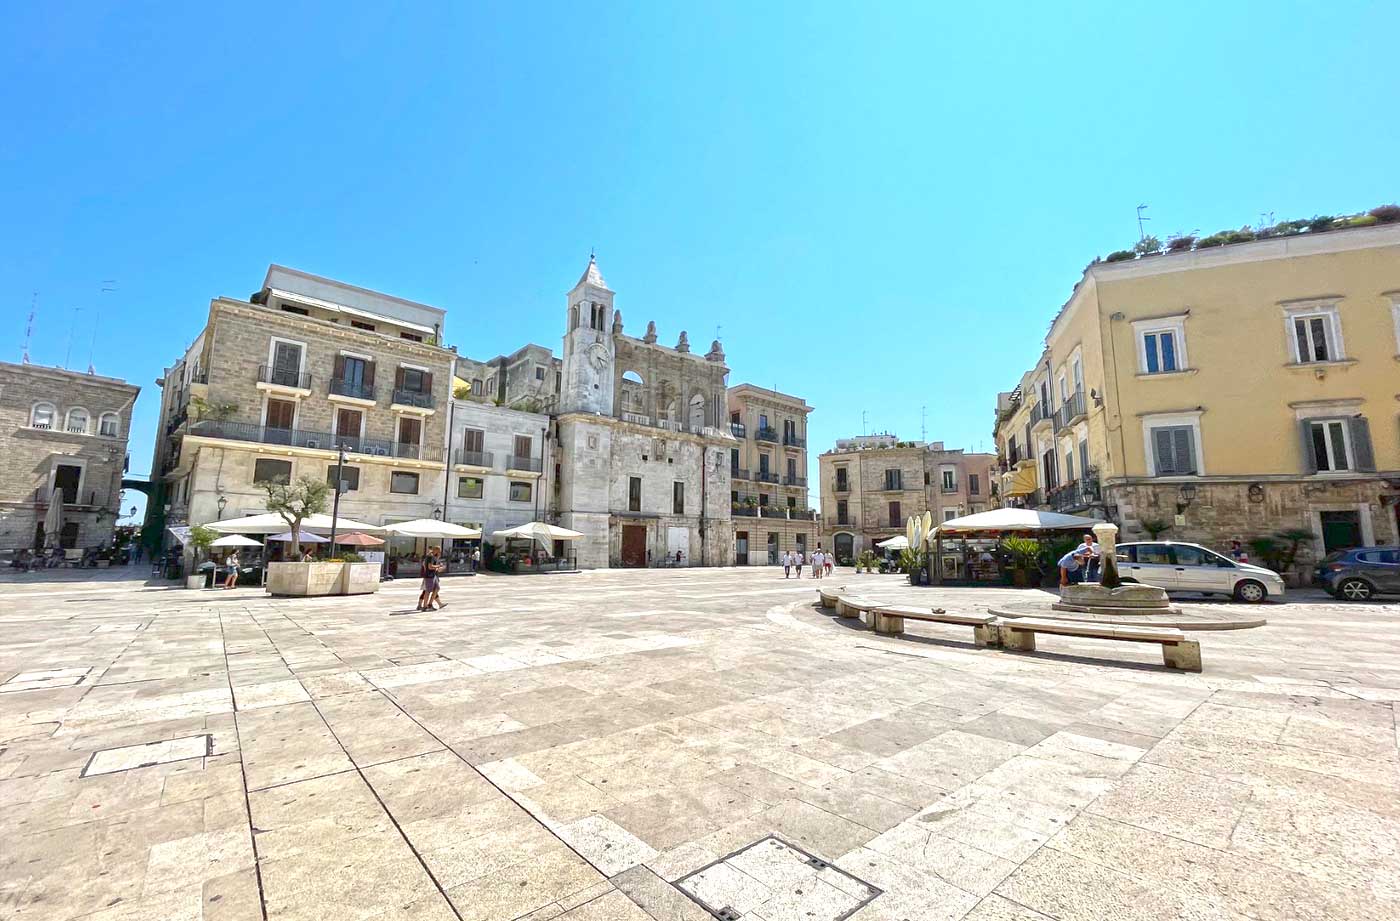 Bari Old Town Square